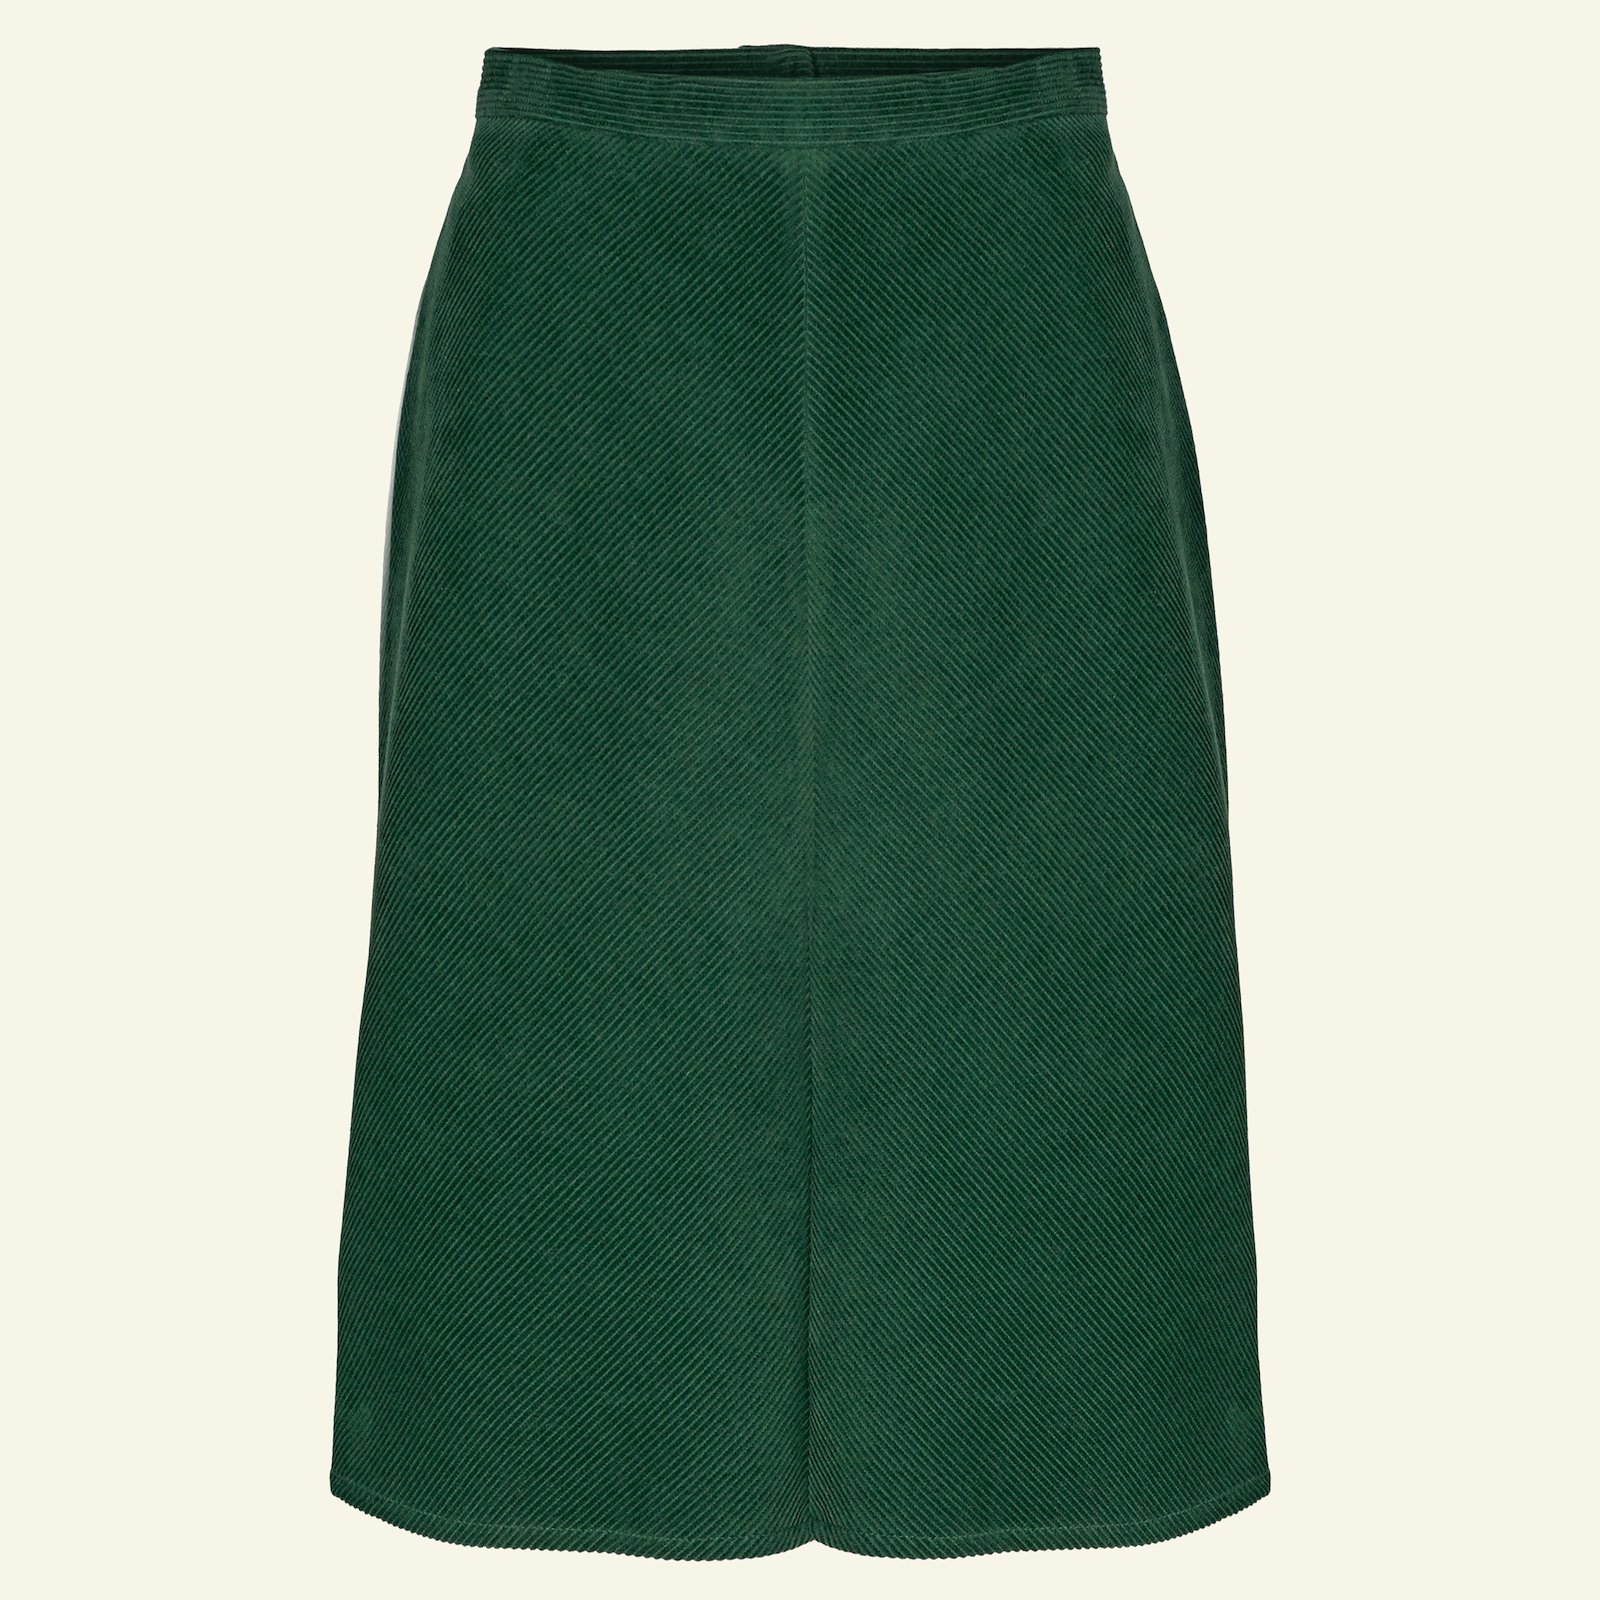 Skirt with A-shape, 46/18 p21038_430819_sskit